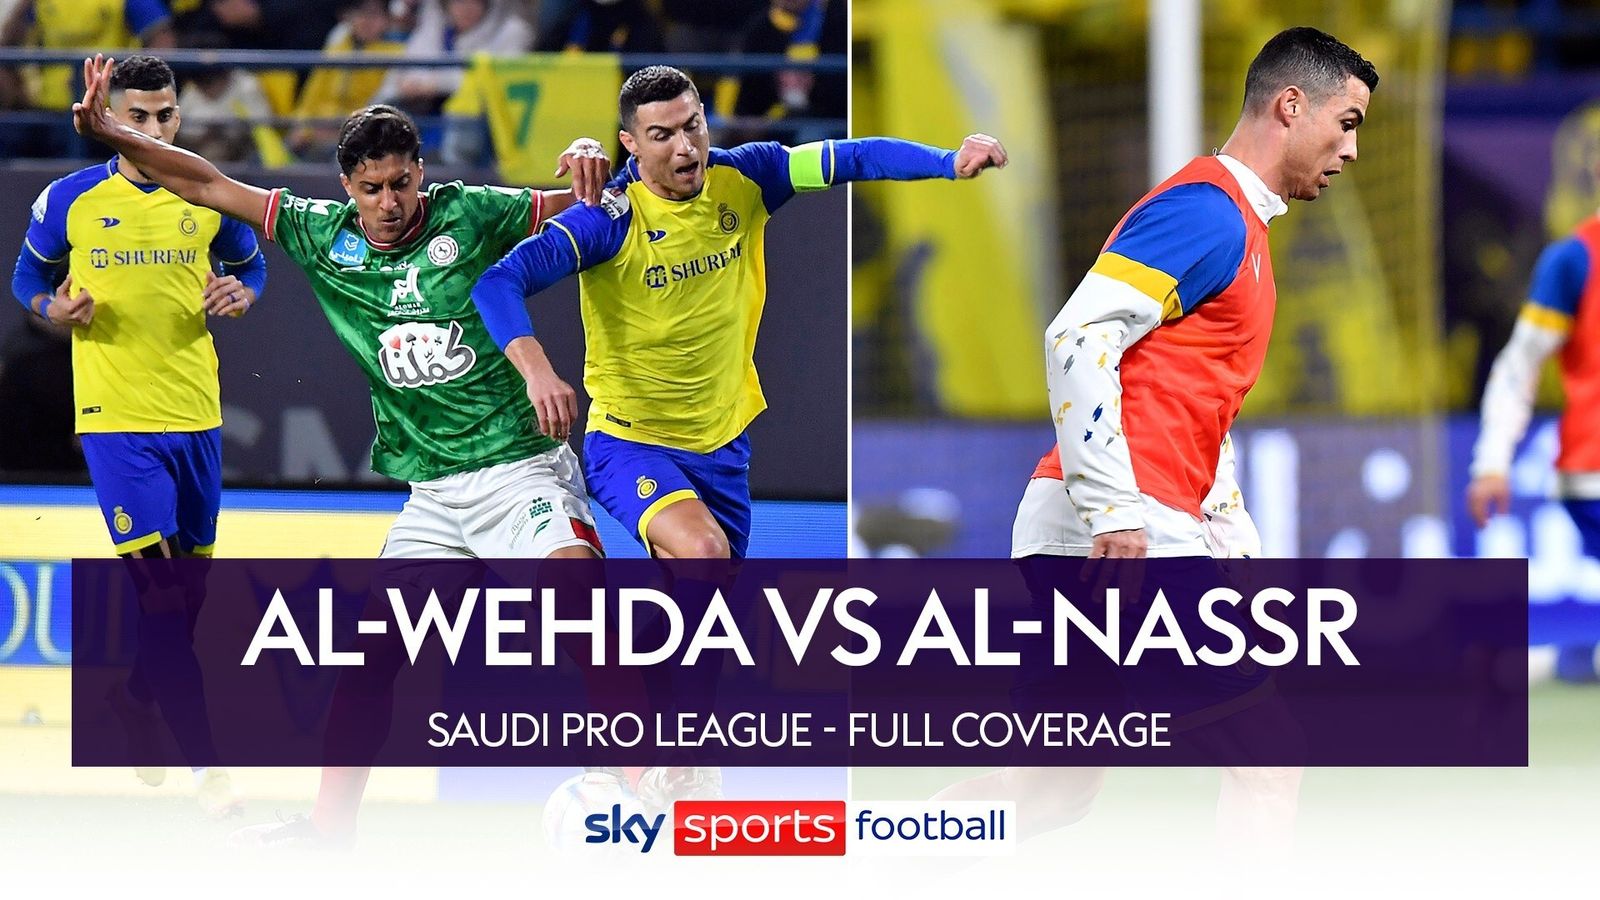 Al Nasr Saudi Club vs. Almeria Spanish Club Friendly Match